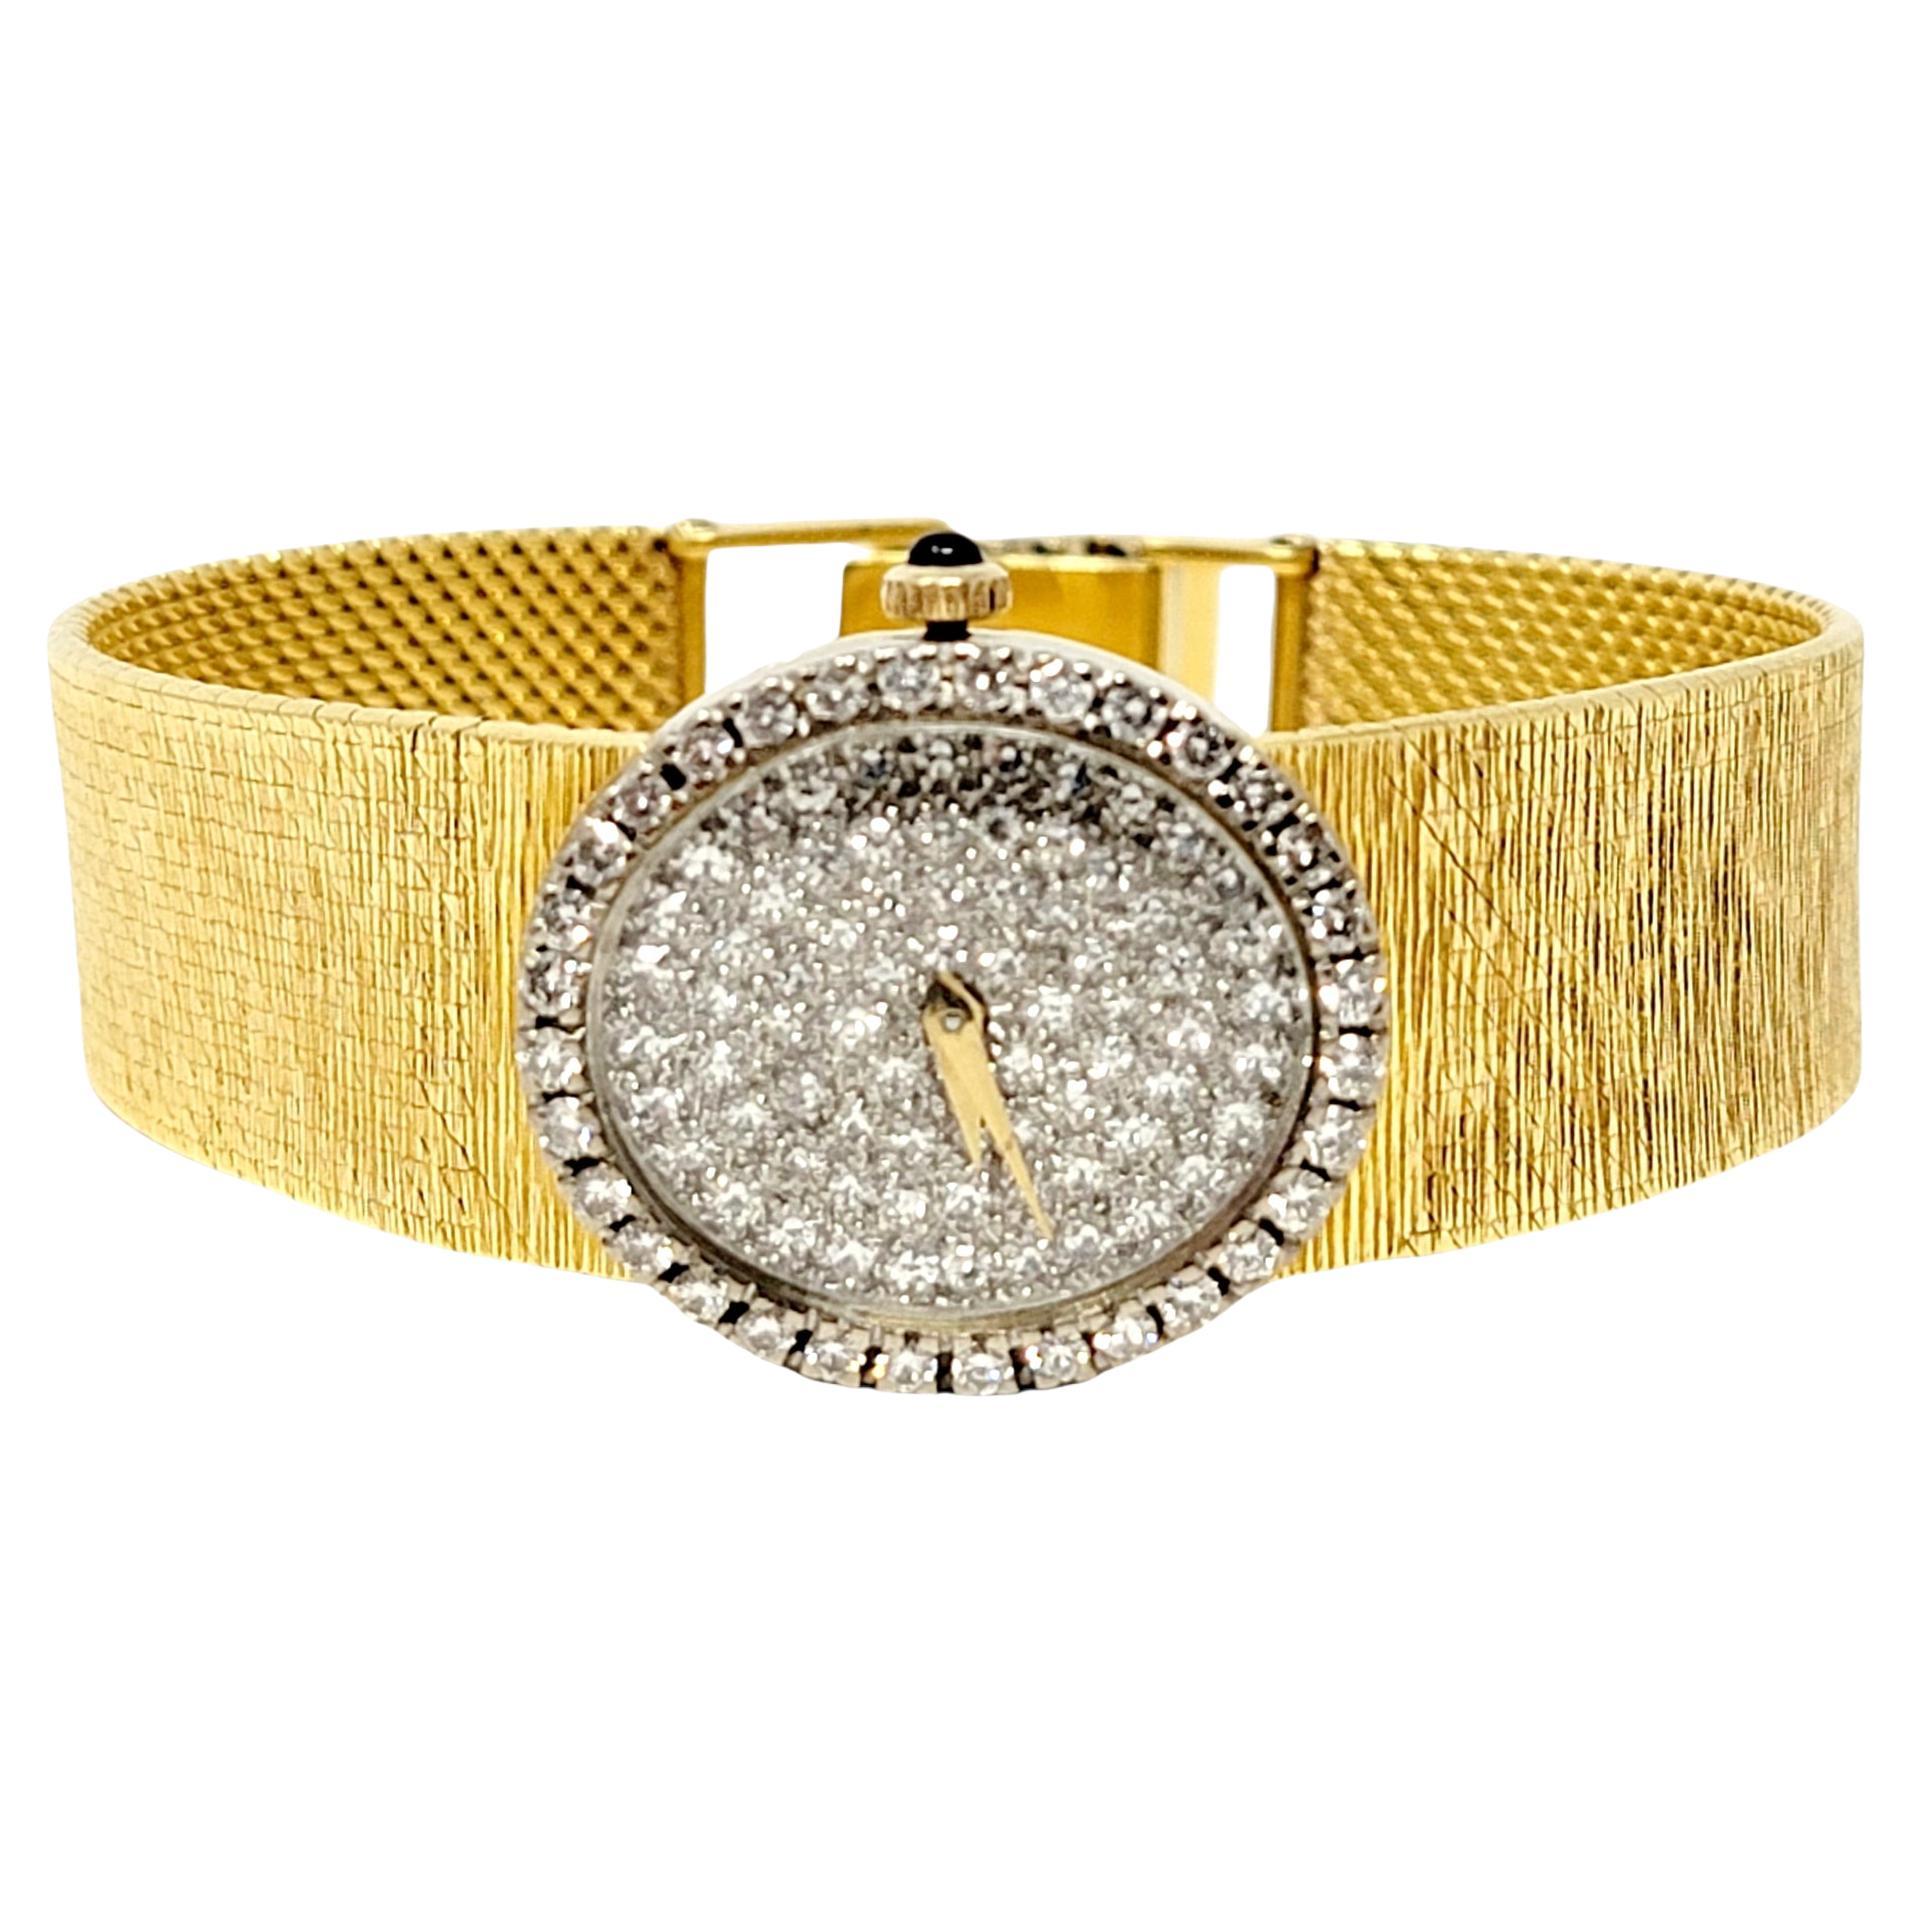 Baume & Mercier Ladies Wristwatch with Diamond Dial and Bezel in 18 Karat Gold